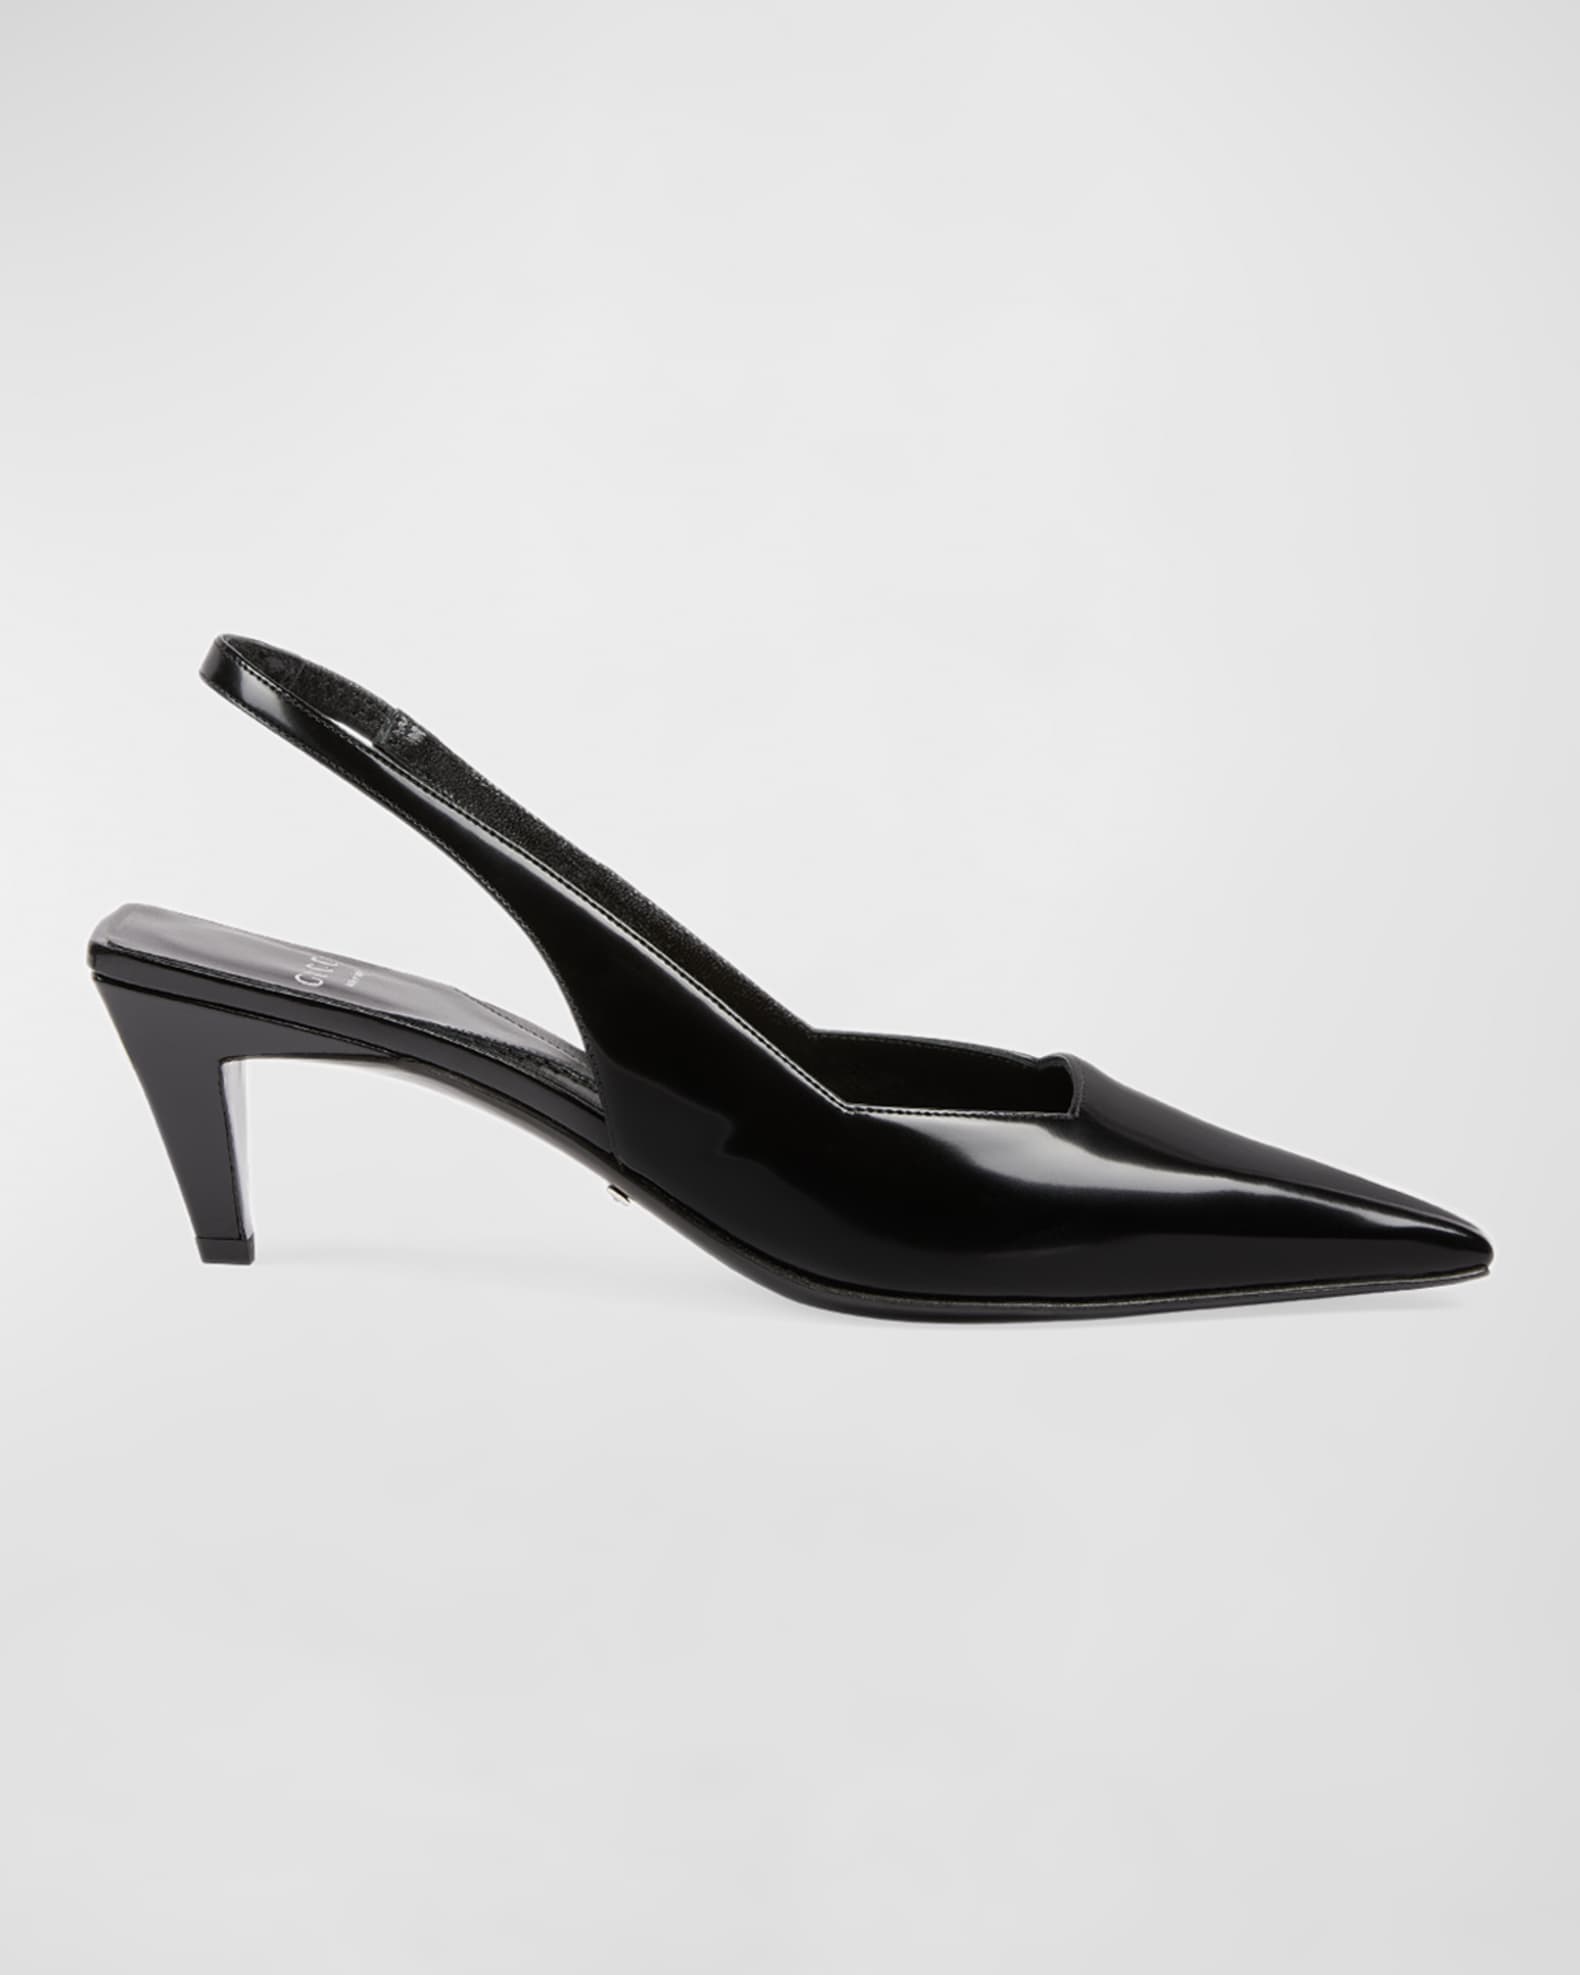 Gucci Women's GG Hardware Pointed Toe Slingback Pumps - Black - Size 10 US / 40 EU